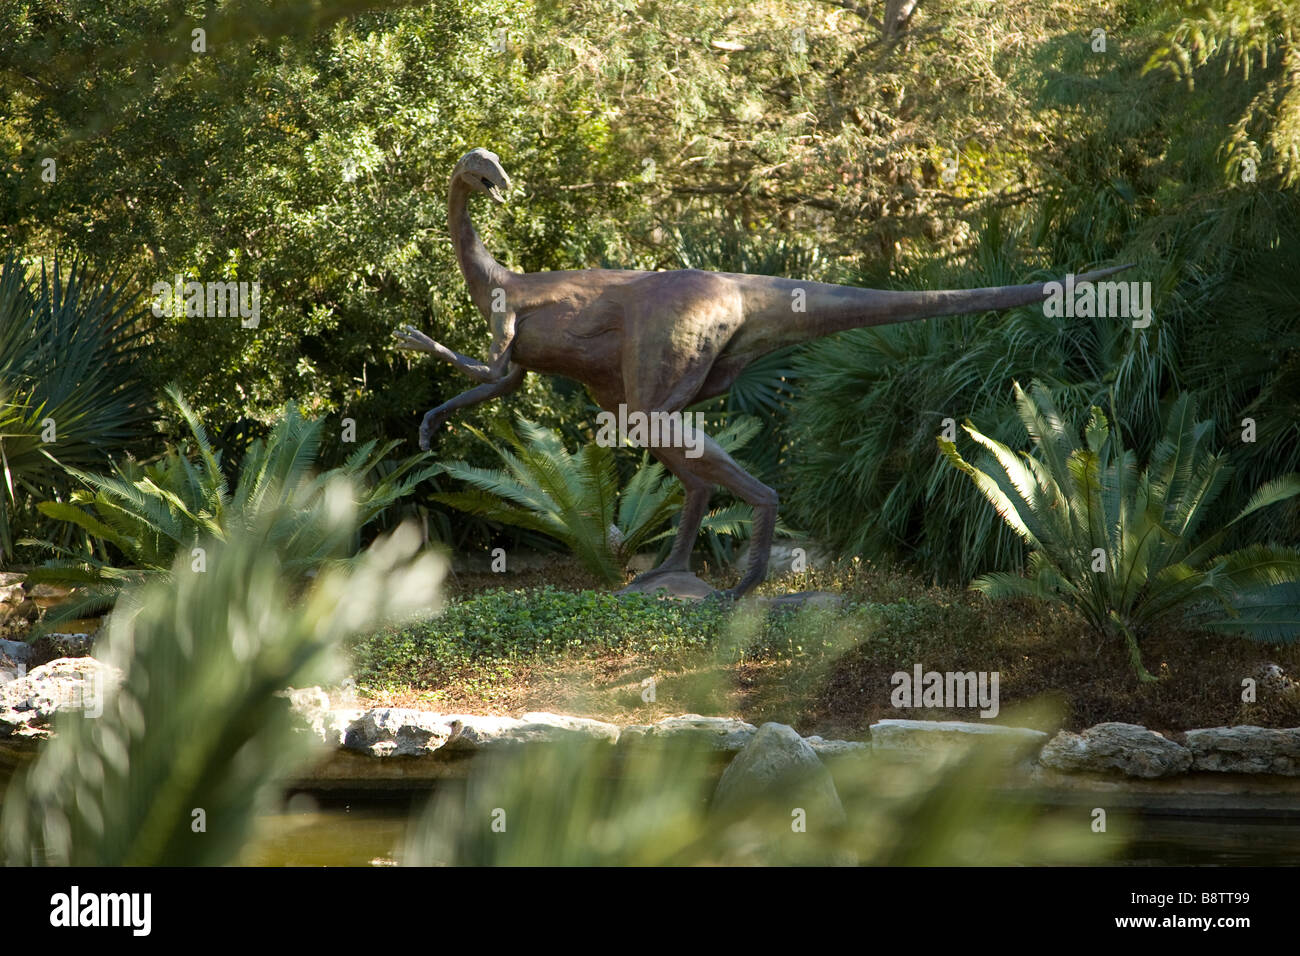 Un bronzo velociraptor statua nel giardino preistorico al Zilker park Giardino Botanico di Austin in Texas Foto Stock